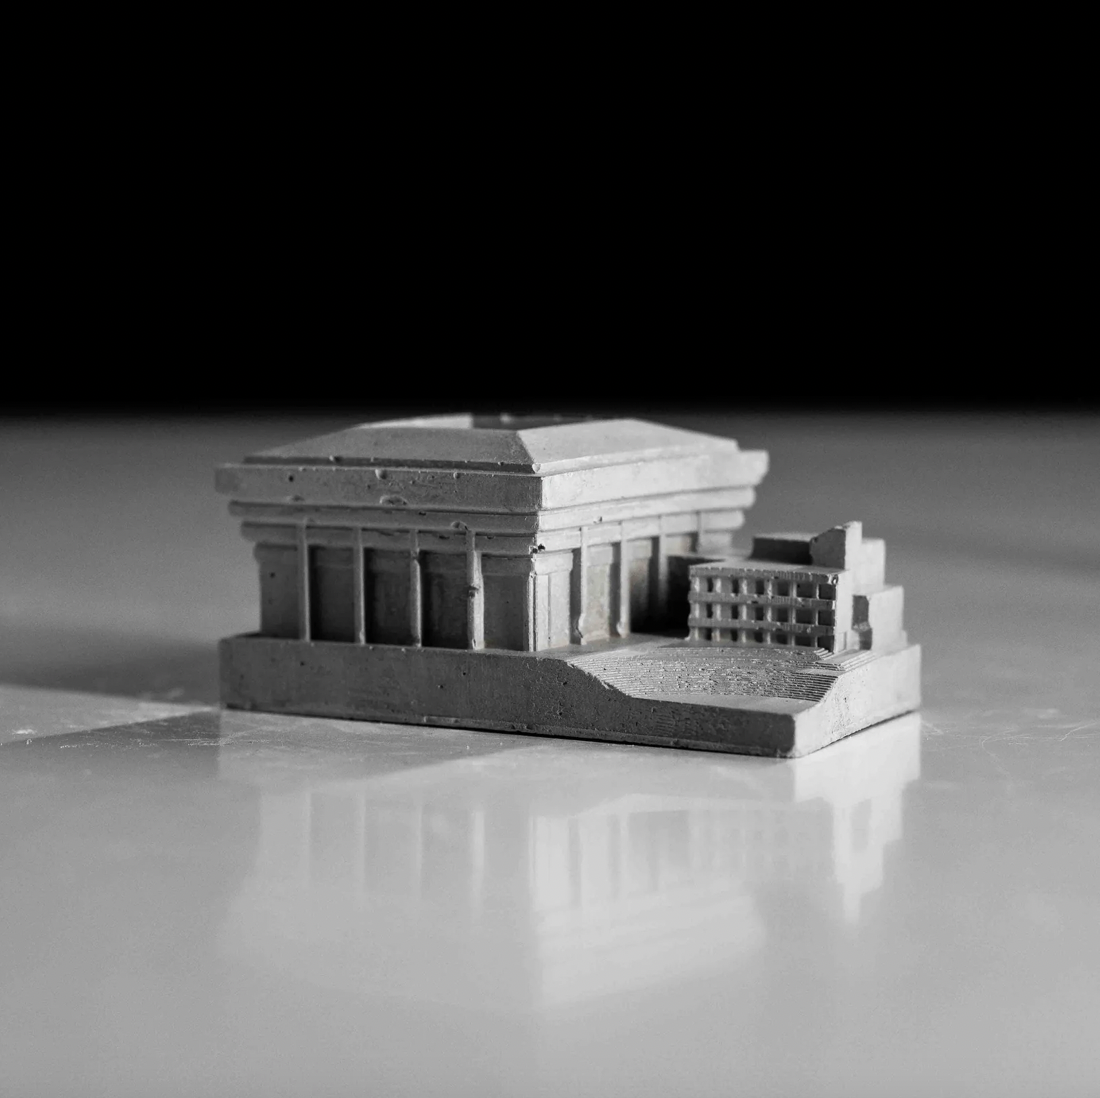 Spaceplay Mini Concrete Model 003: Birmingham Central Library